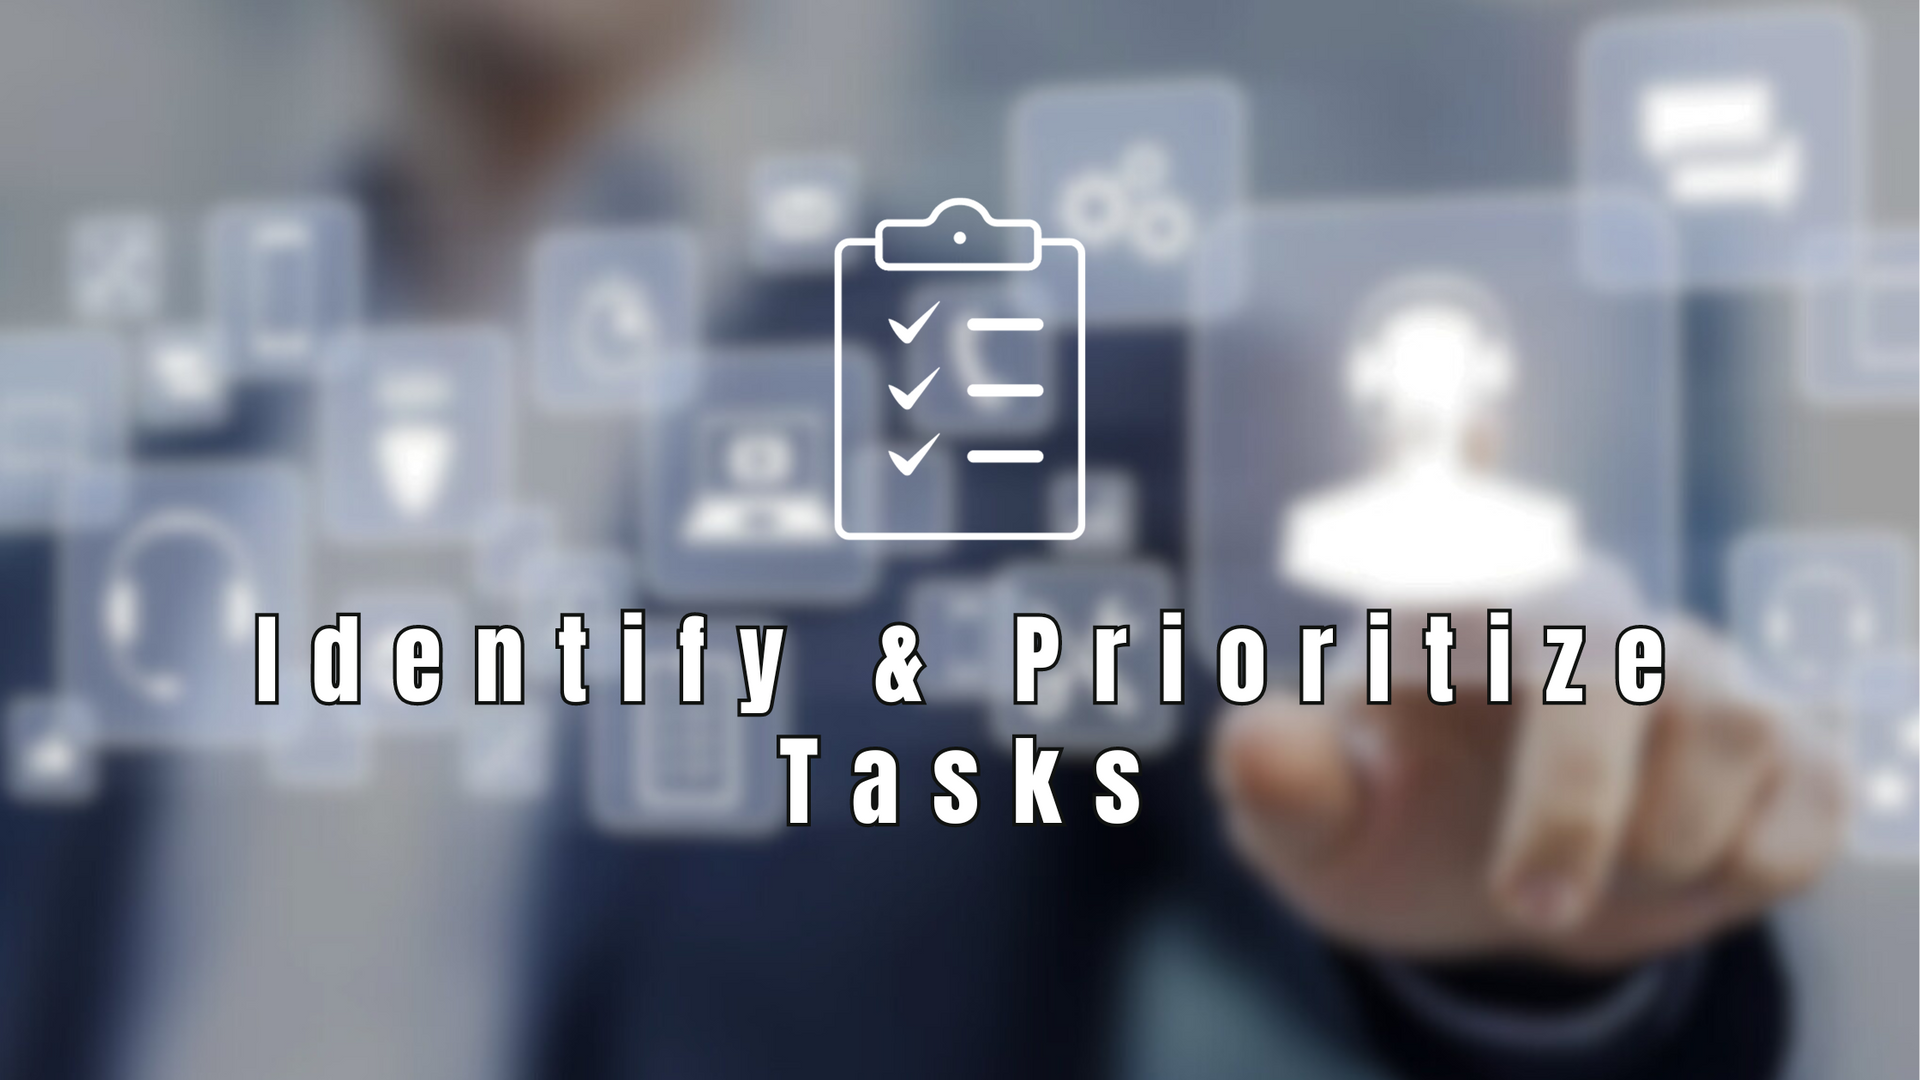 Step 1: Identifying and Prioritizing Tasks